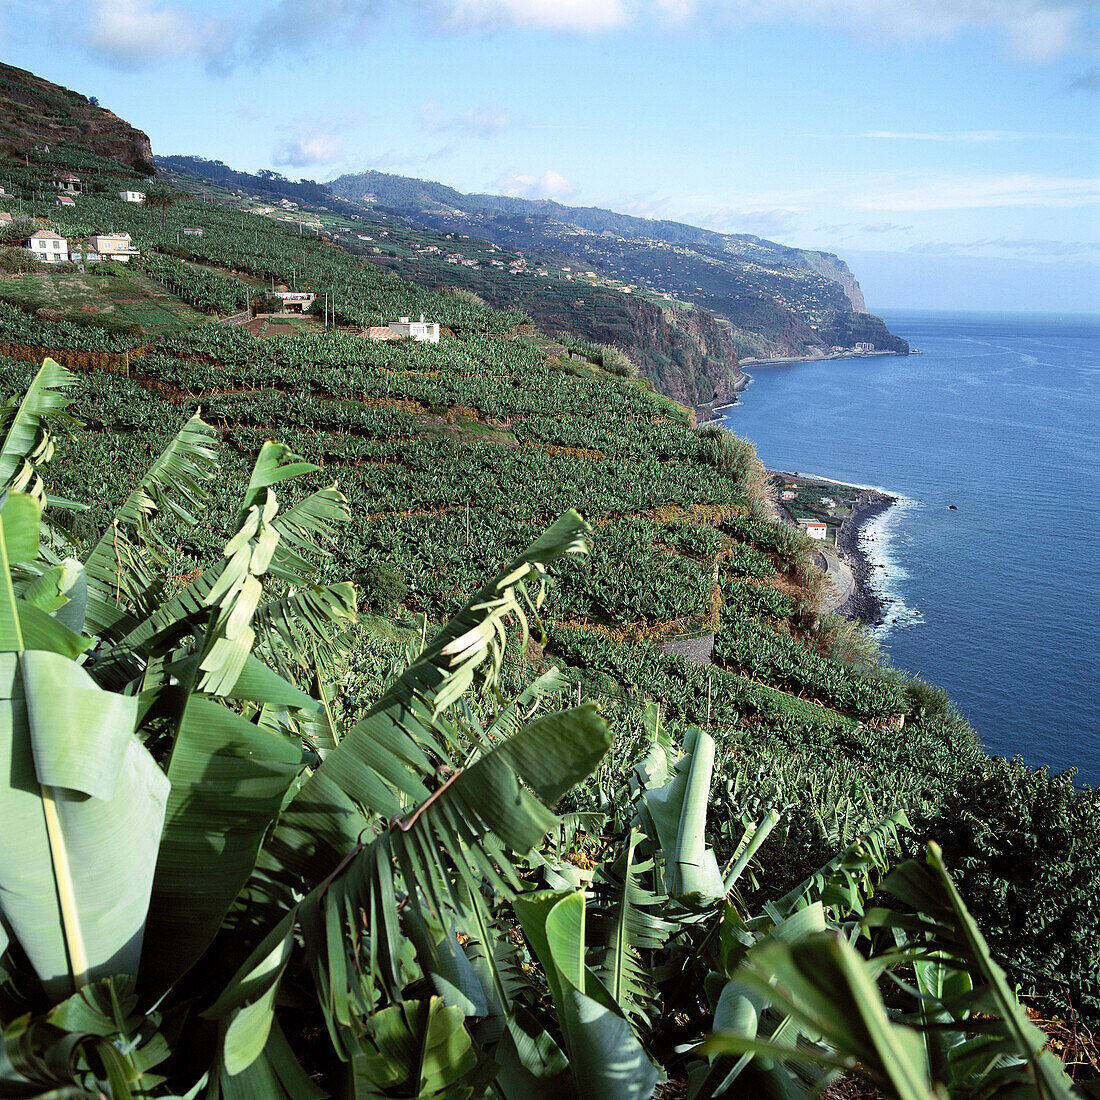 Banana trees plantation. Punta do Sol, Madeira Island, Portugal